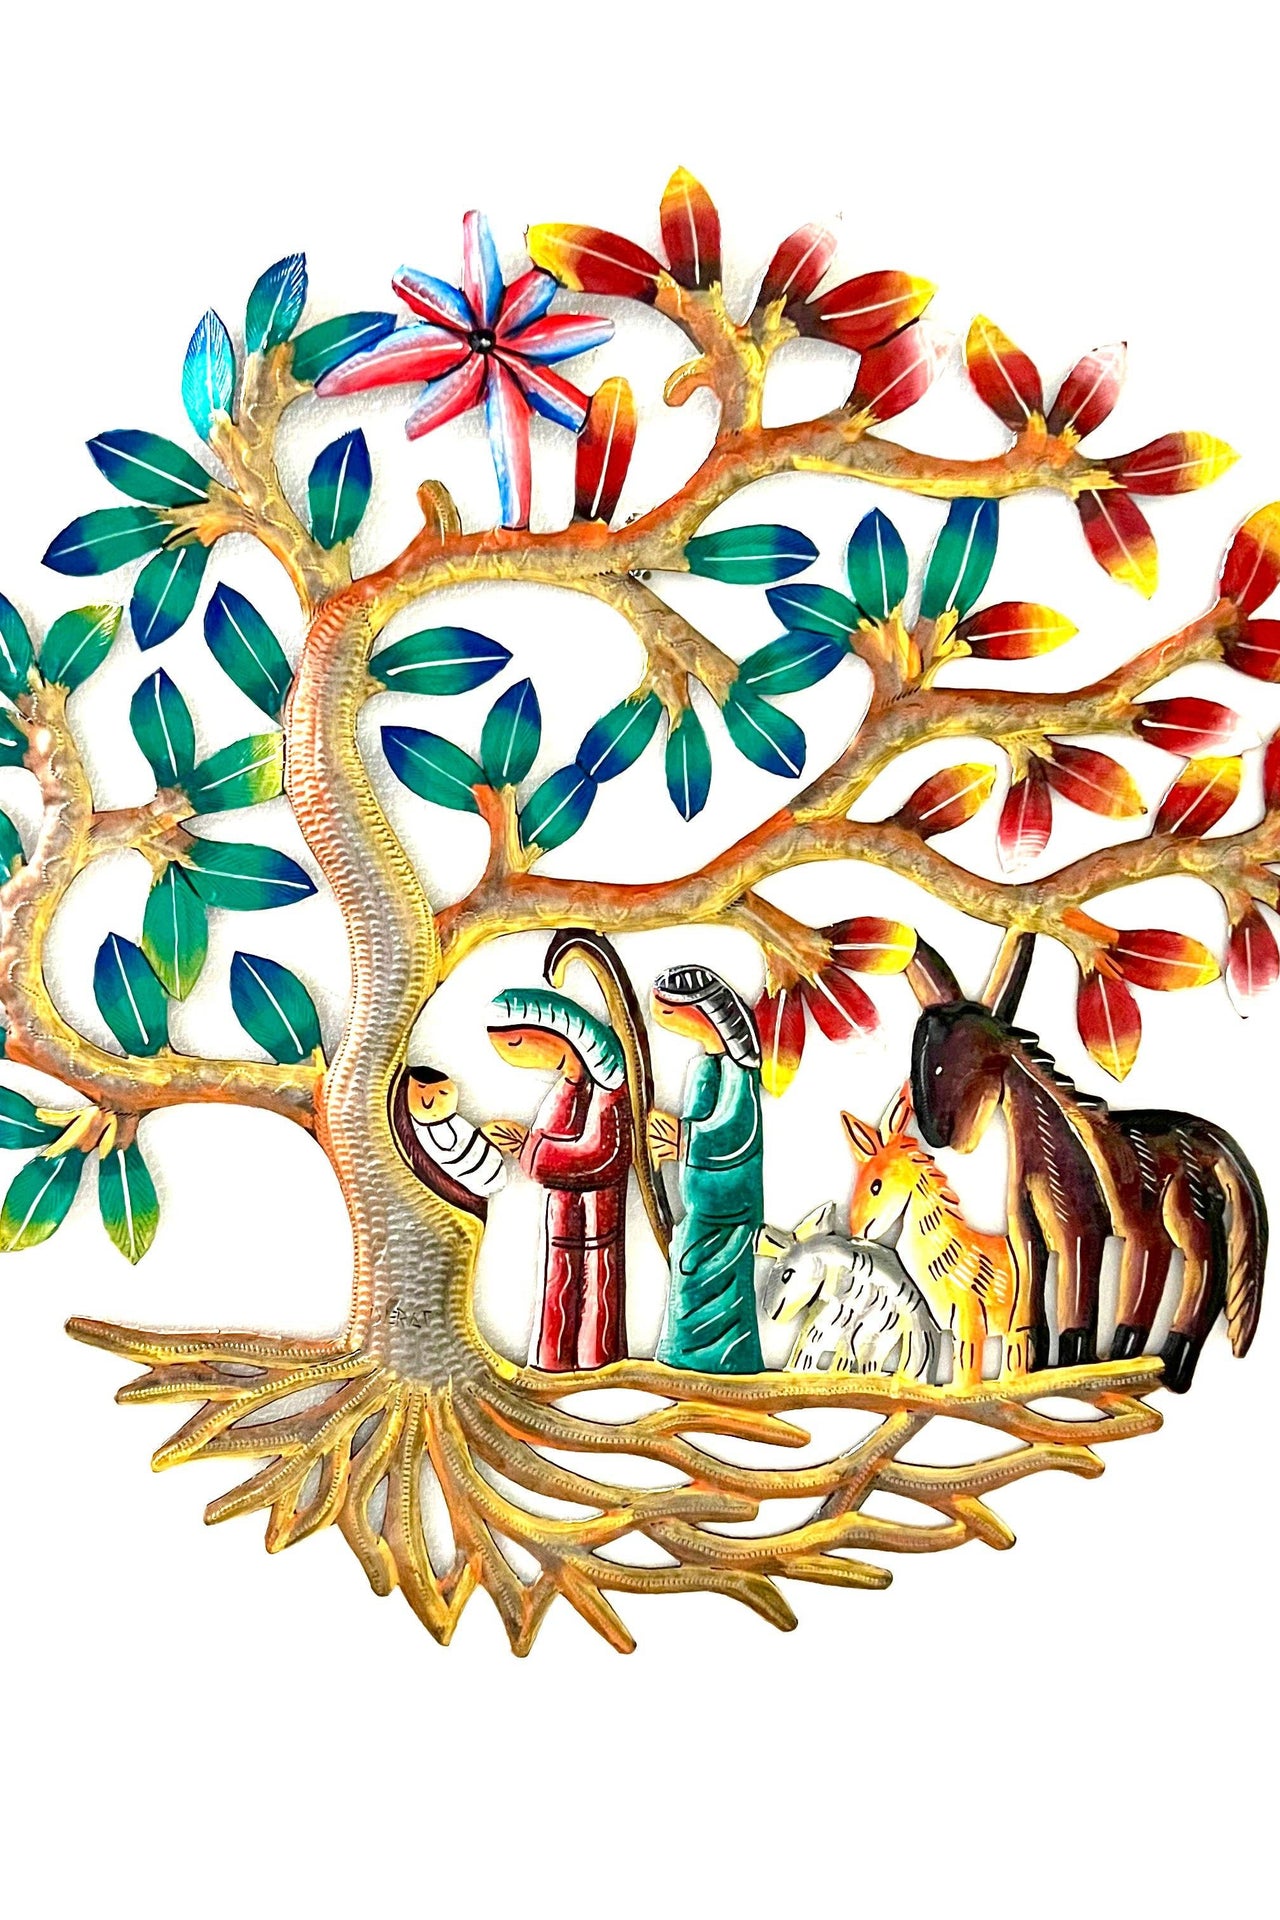 Shepherd Tree of Life Nativity